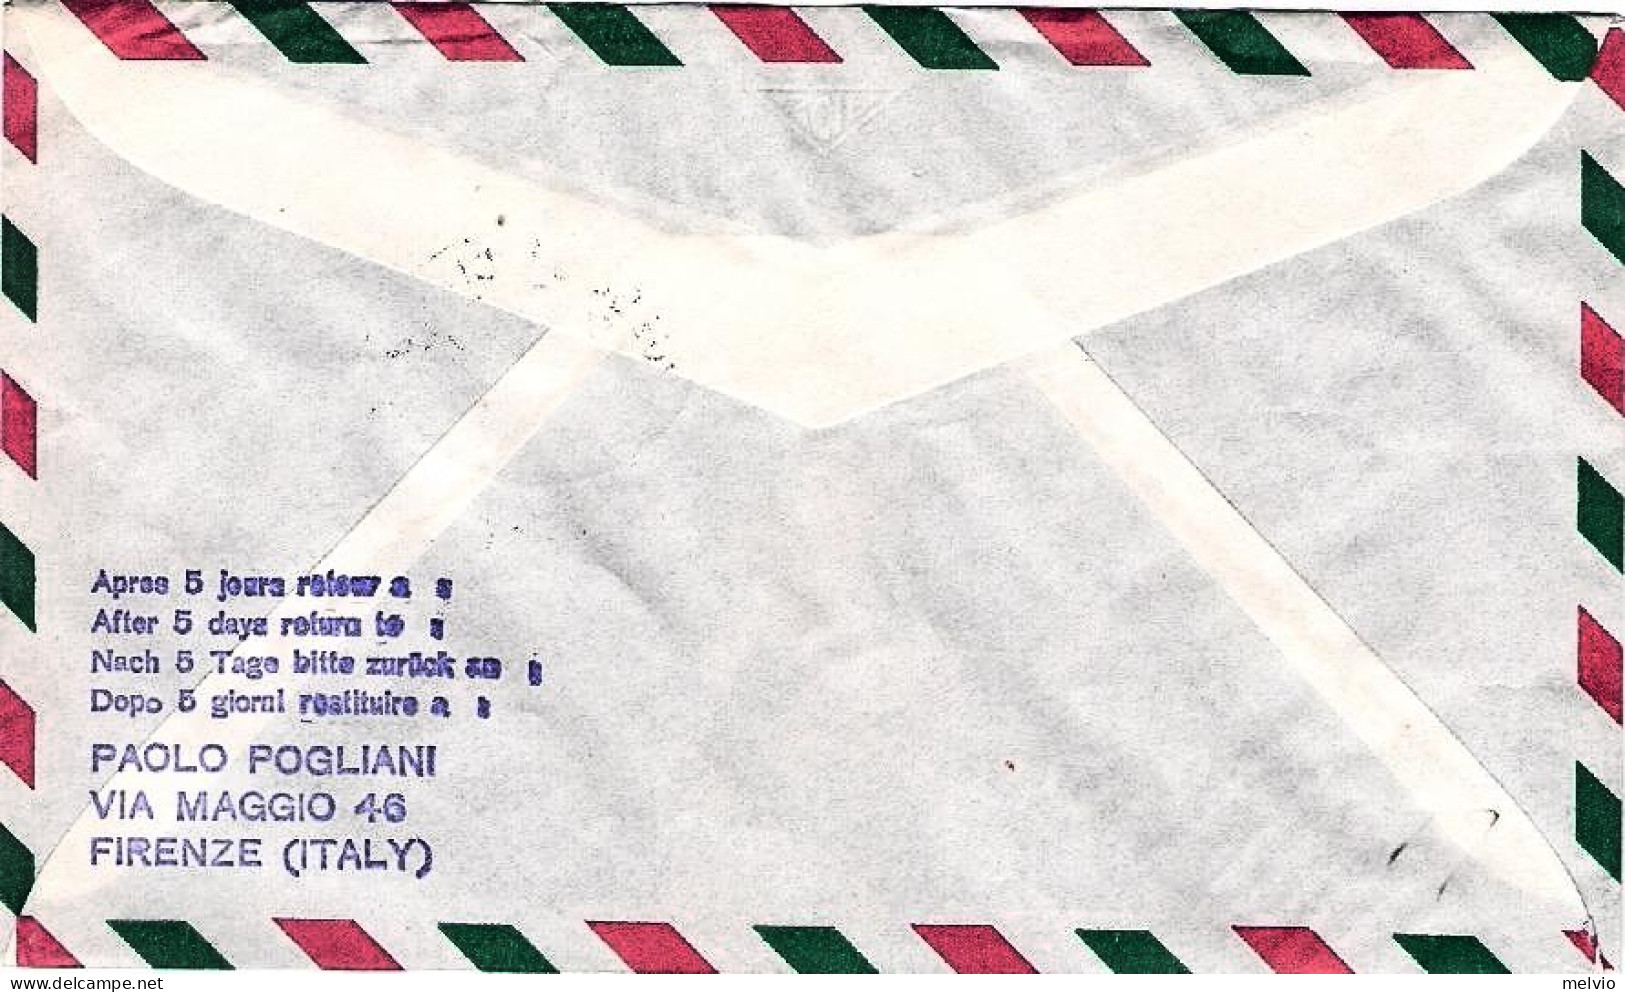 San Marino-1964 Diretto A Showaku Nagoya "Mit Interflug Olympiade Flug Via Berli - Airmail